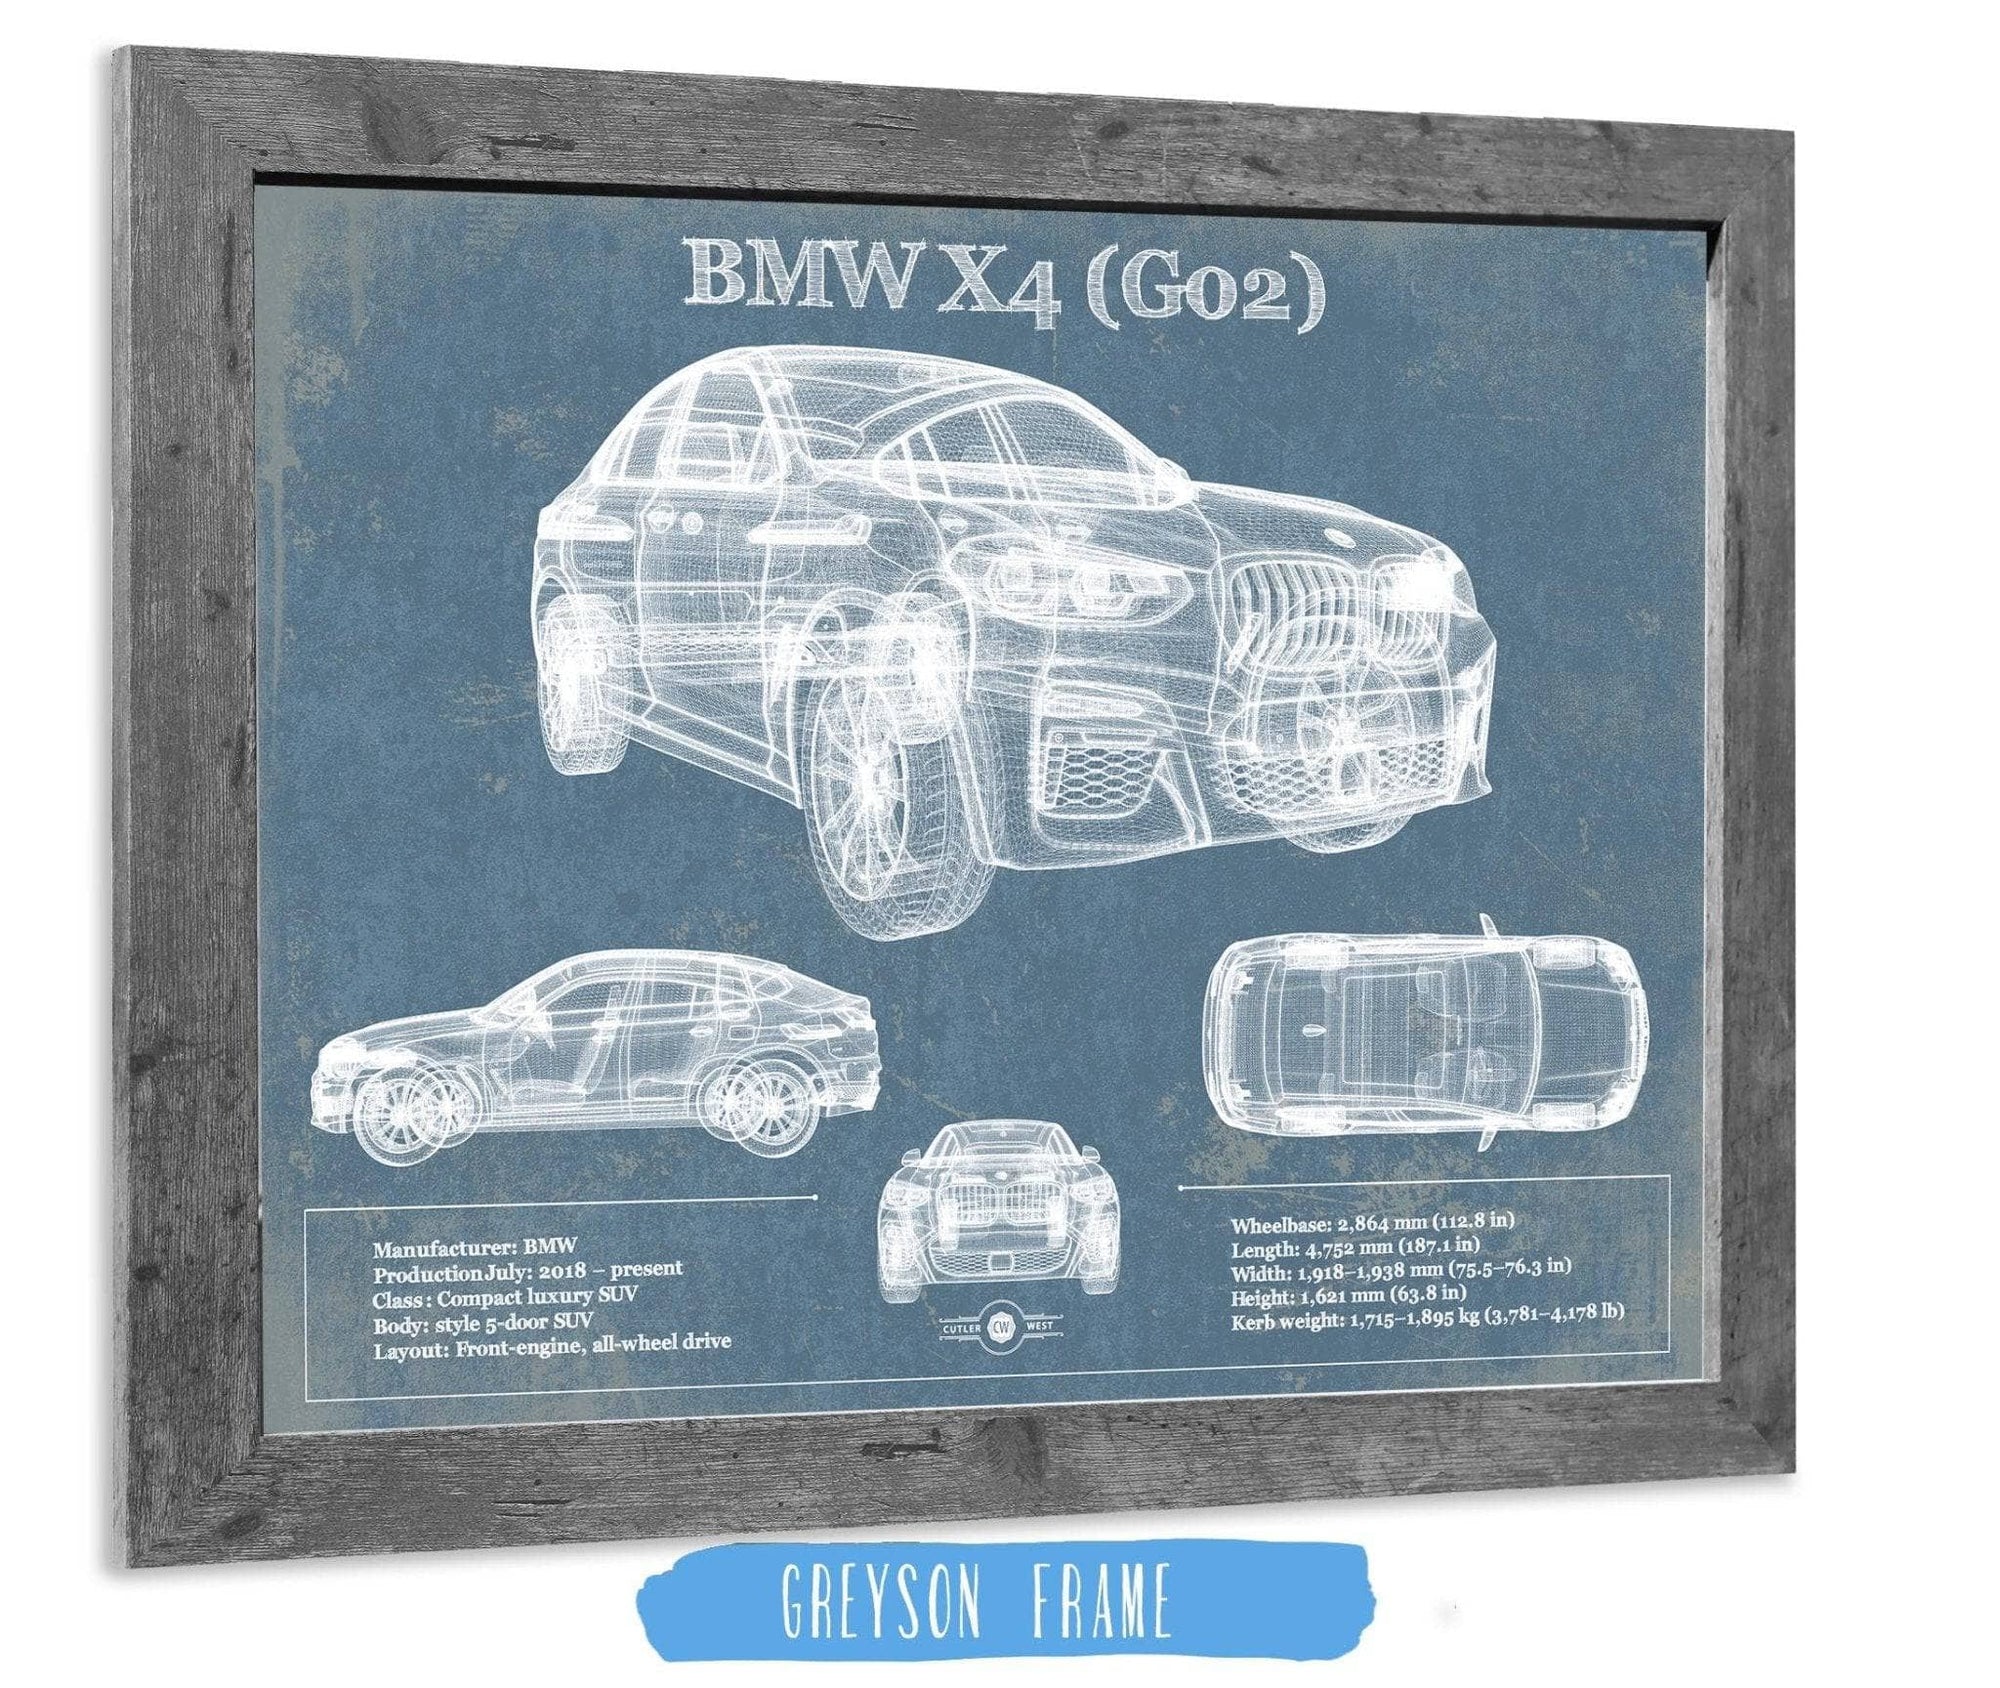 Cutler West Vehicle Collection 14" x 11" / Greyson Frame BMW X4 (G02) Vintage Blueprint Auto Print 833110088_49074